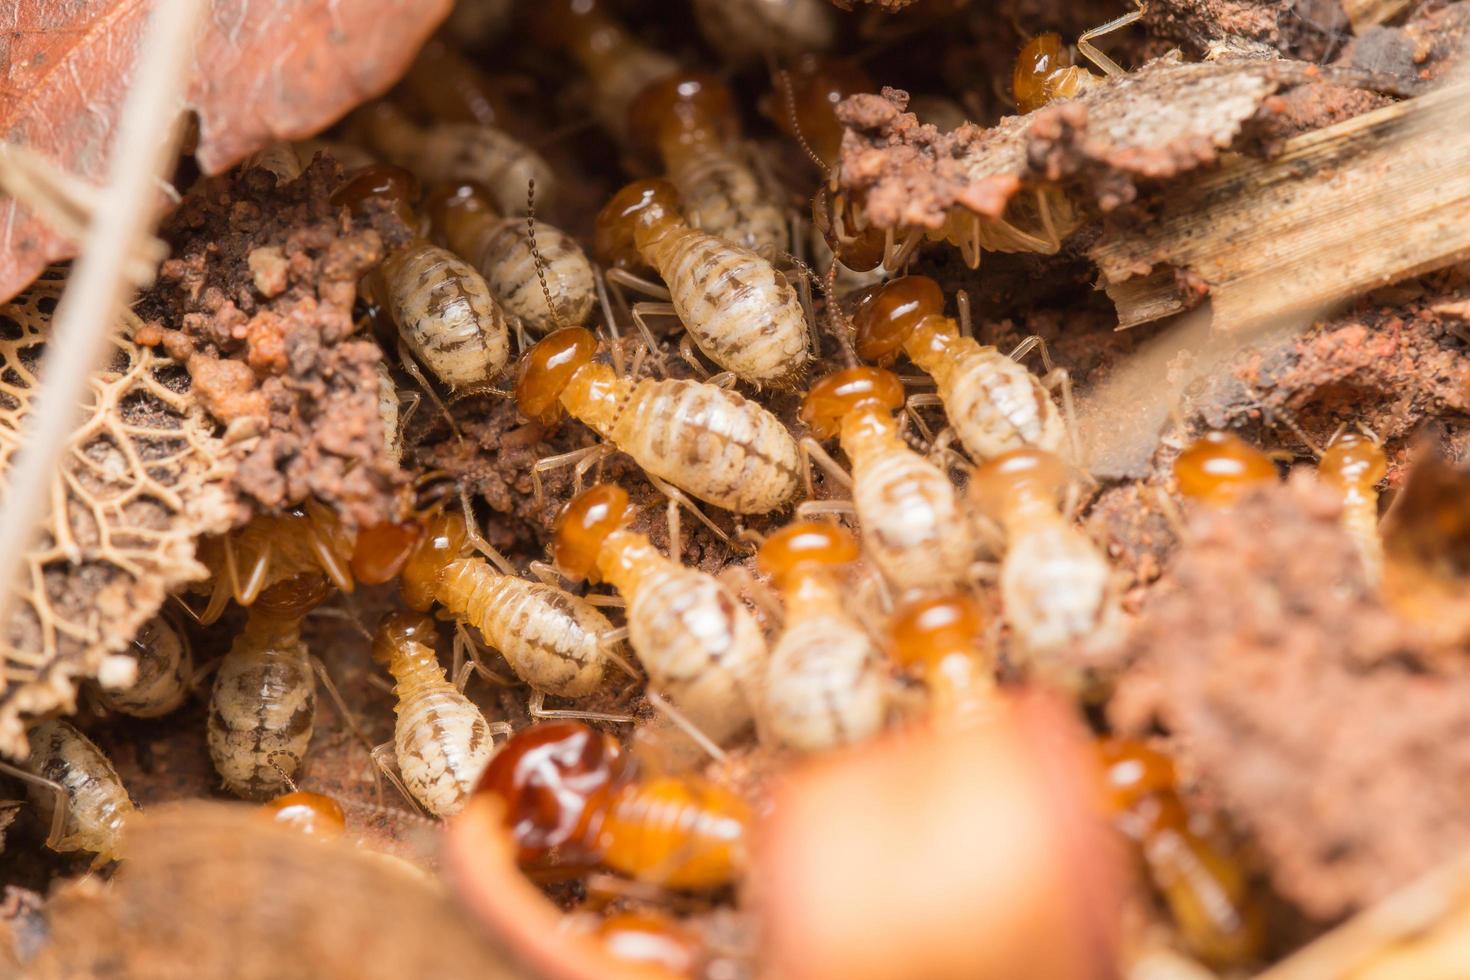 Termites help unload wood chips. photo